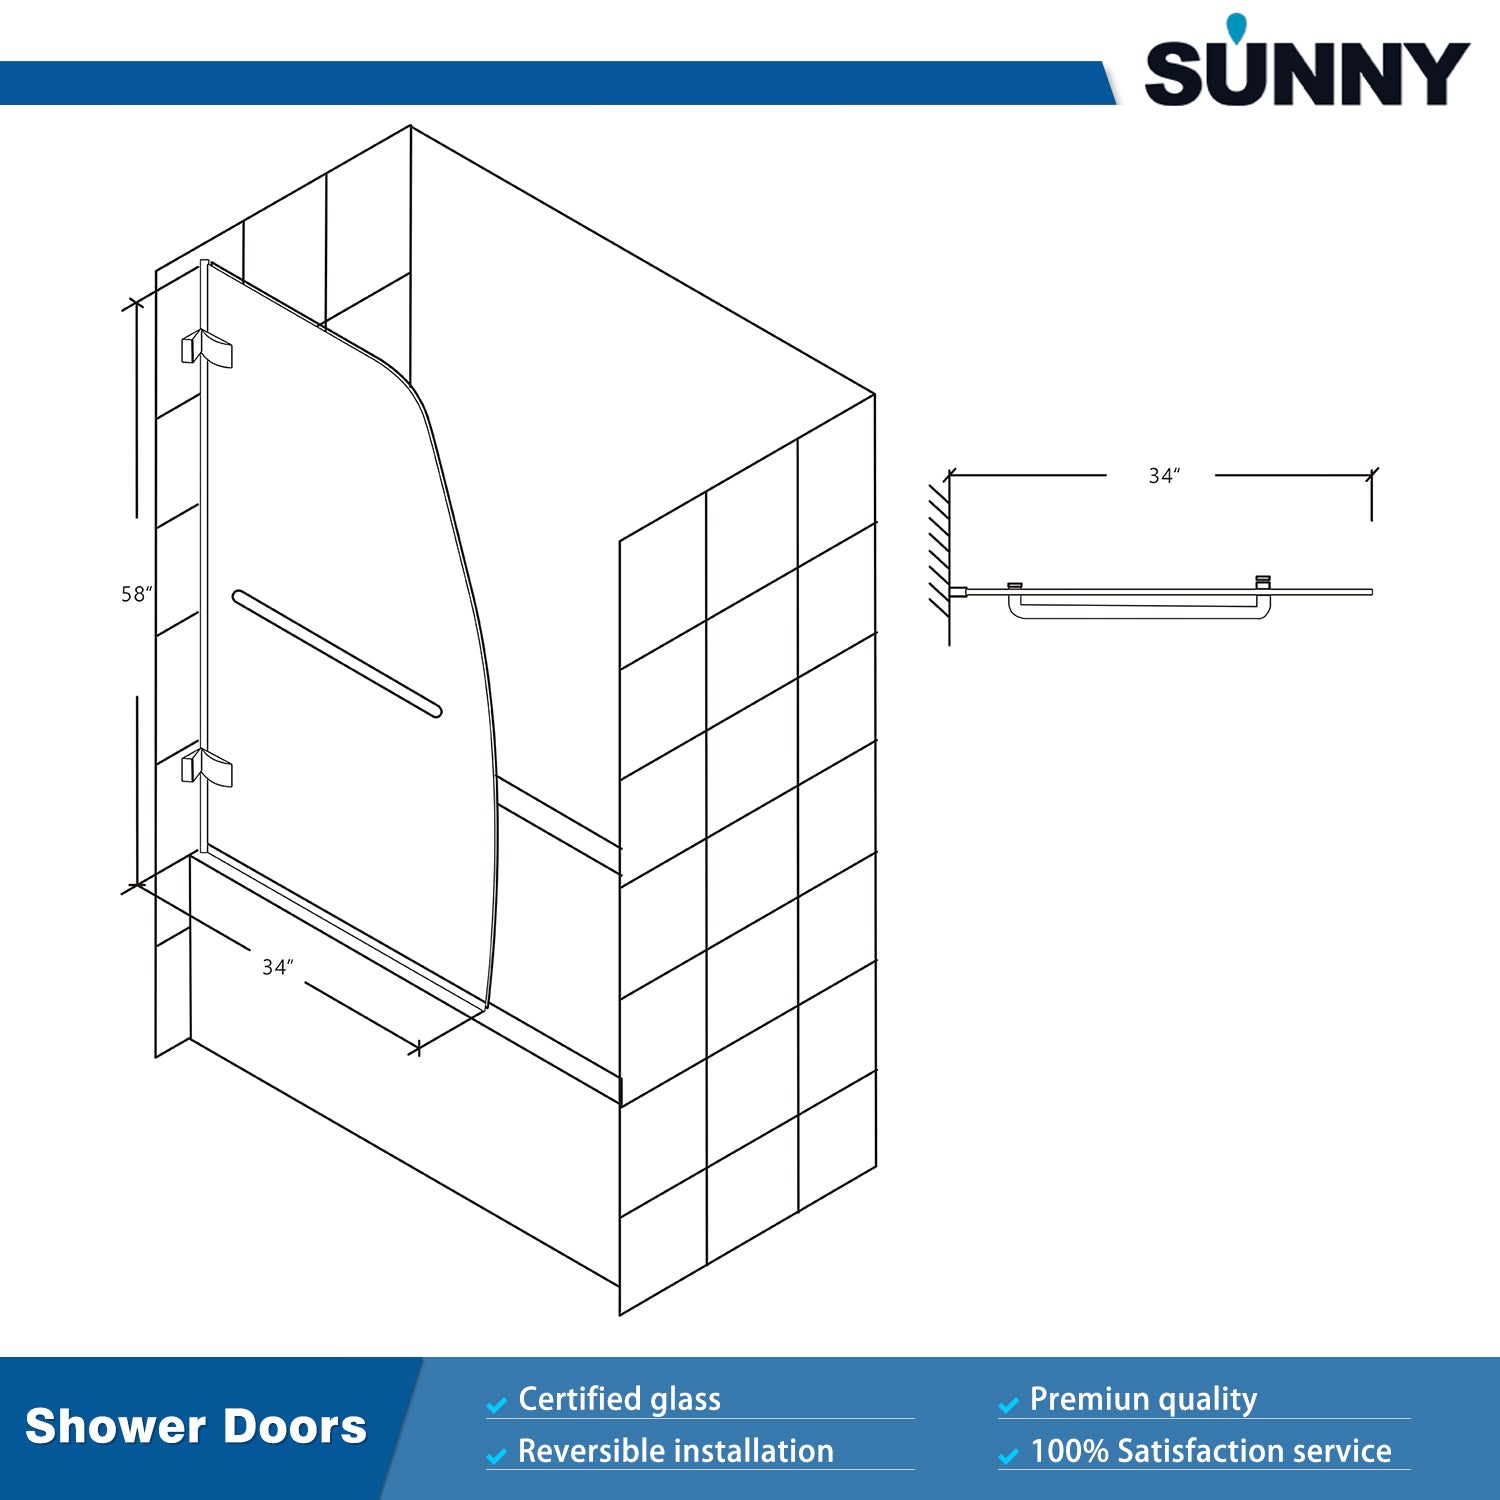 SUNNY SHOWER 34 in. W x 58 in. H Frameless Black Finish Bathtub Hinged Door Size Chart